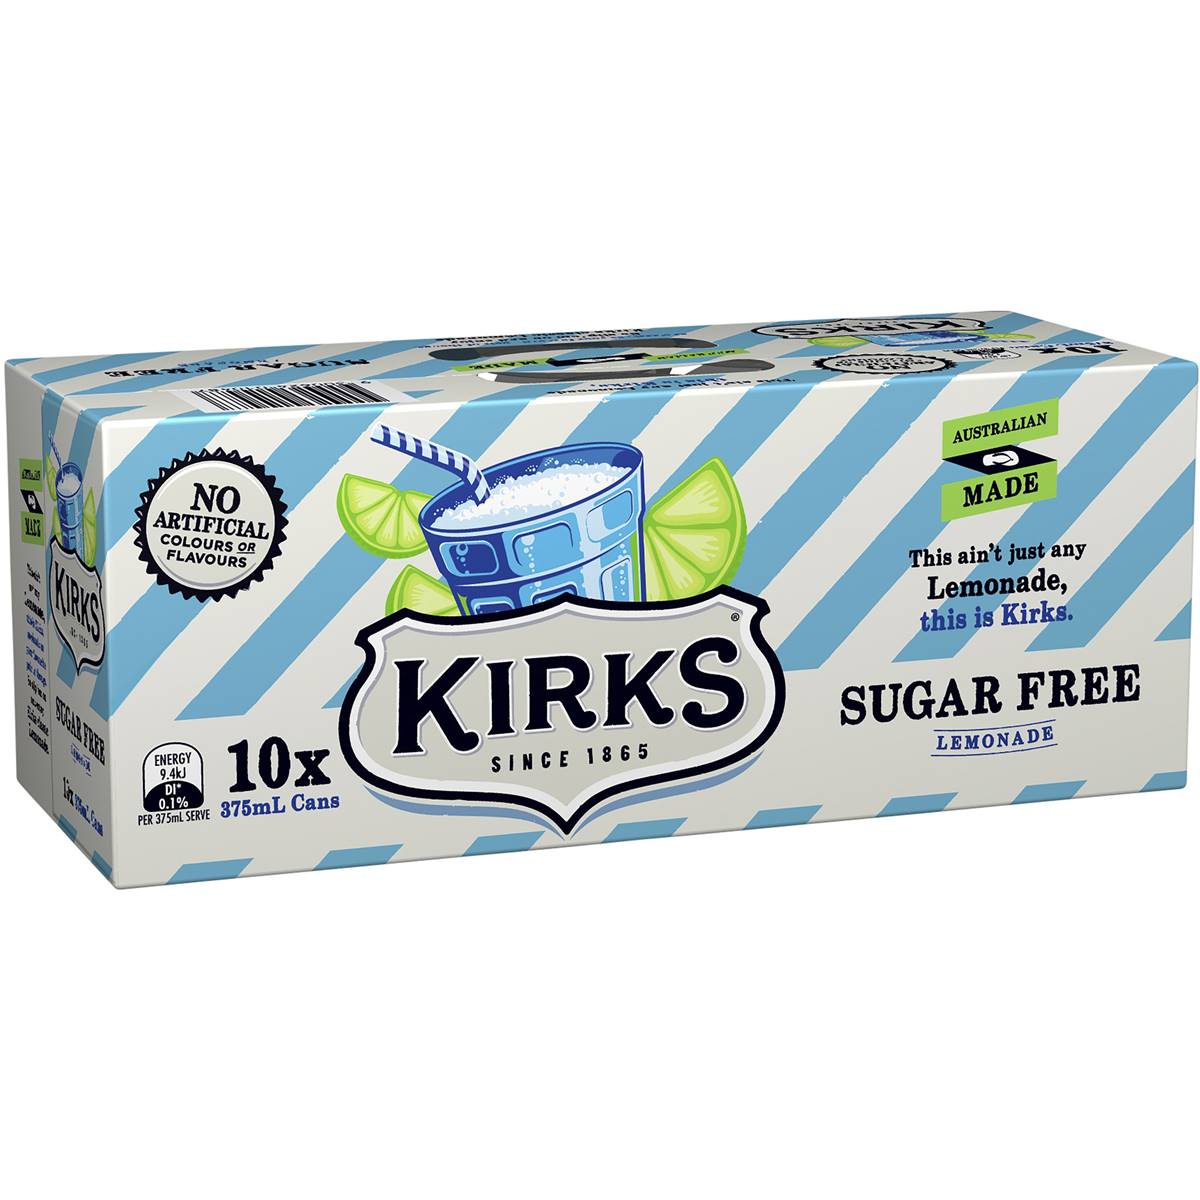 Kirks Sugar Free Lemonade 10pk cans